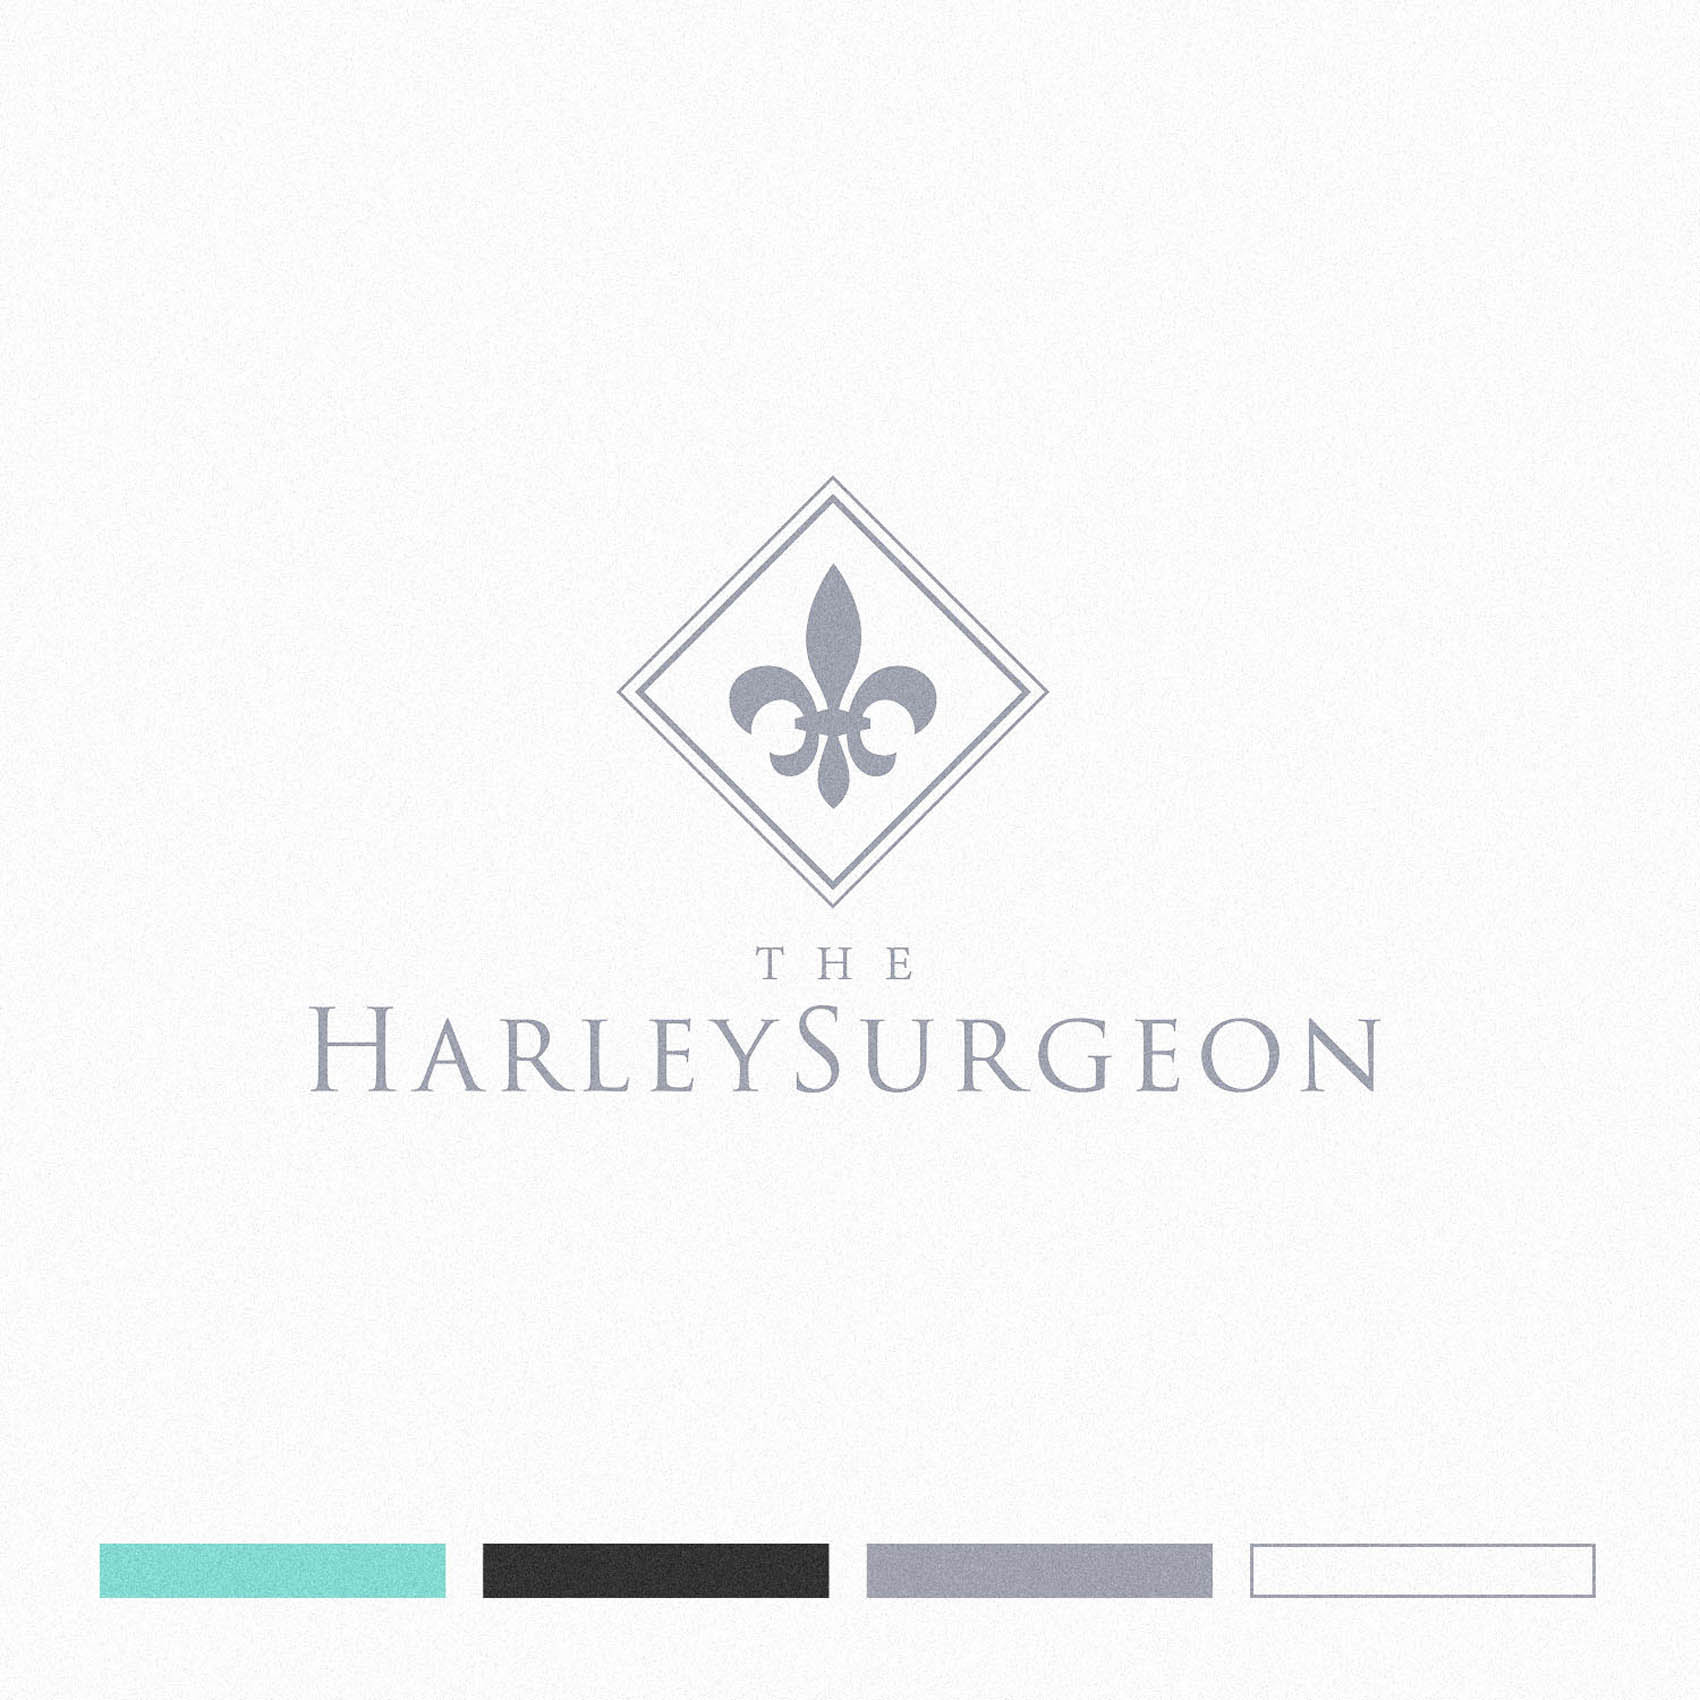 The Harley Surgeon - Luxury High End brand identity logo design london10